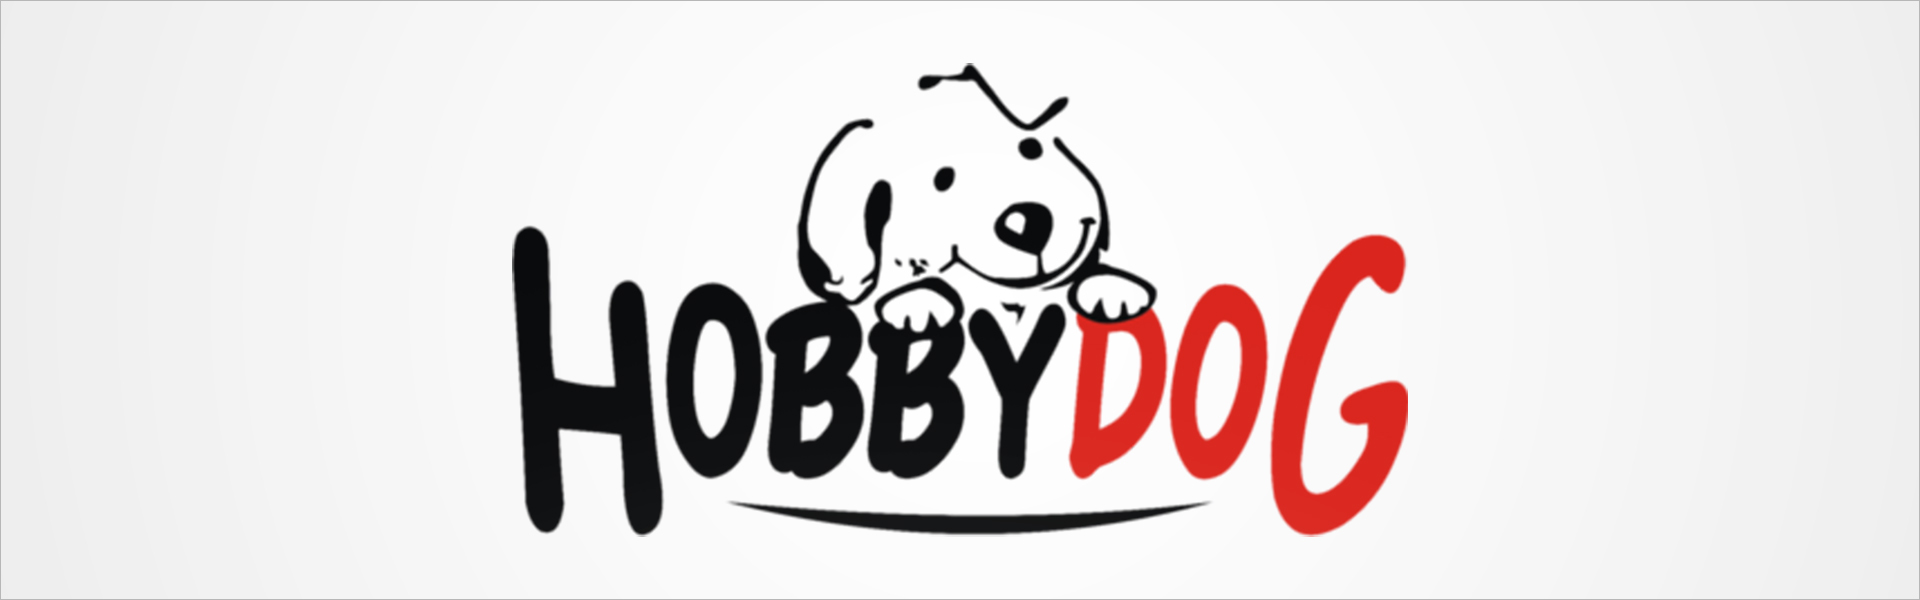 Guļvieta Hobbydog Glamour Exclusive, XL, 100x68 cm, sarkana/melna Hobbydog